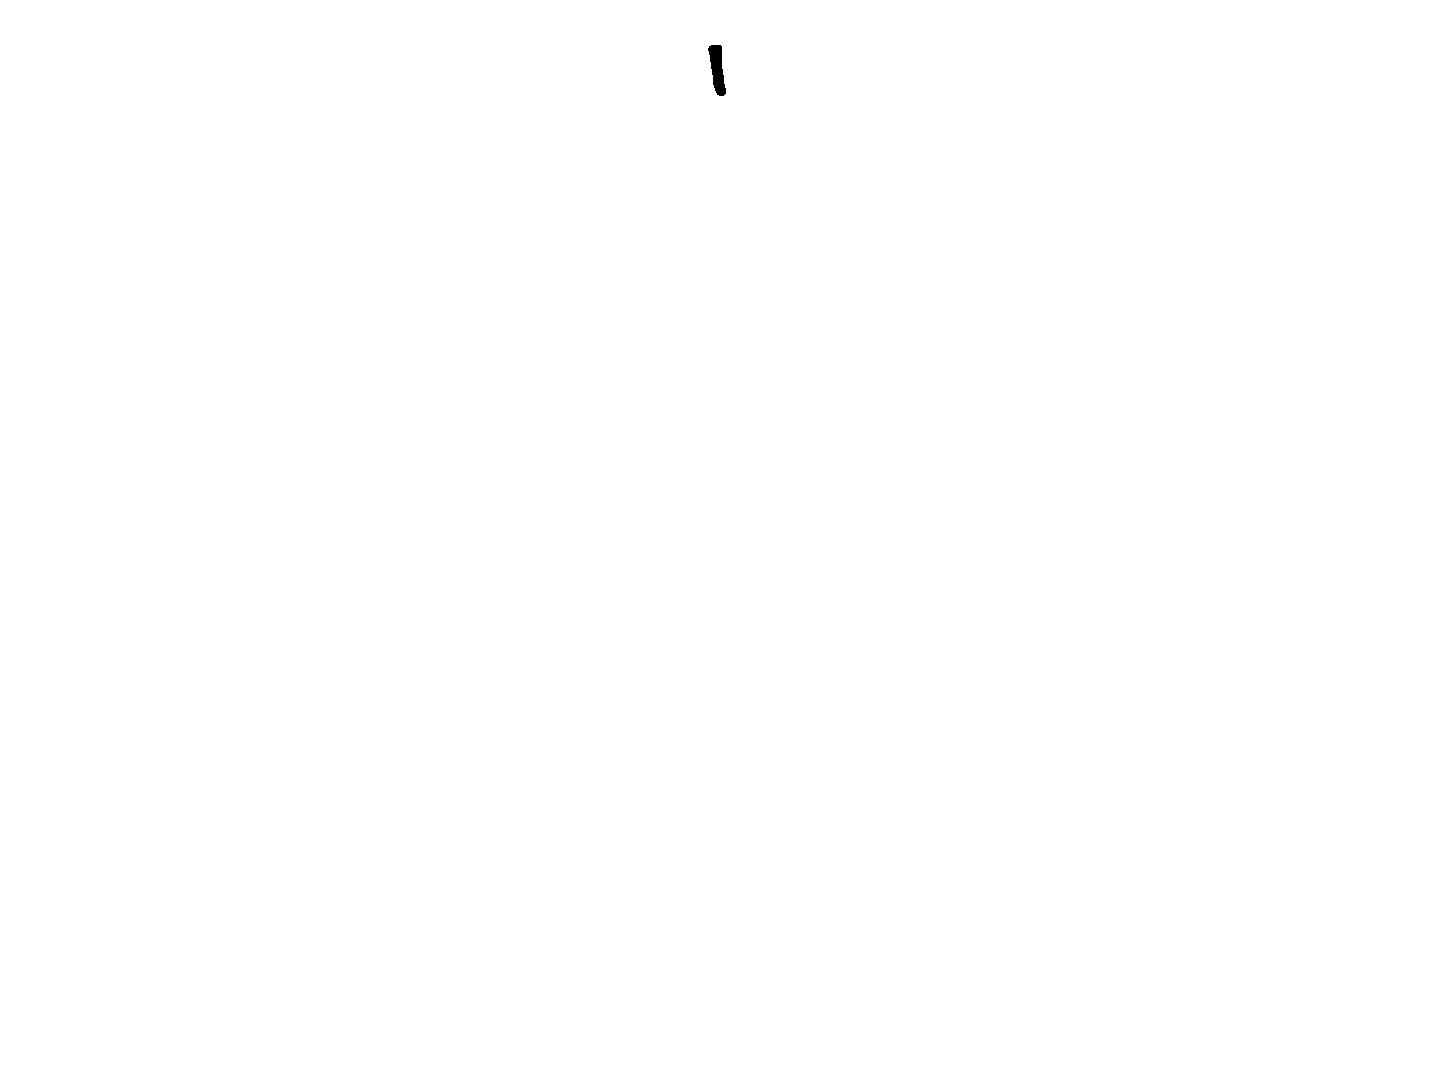 Hydrostation animated logo black